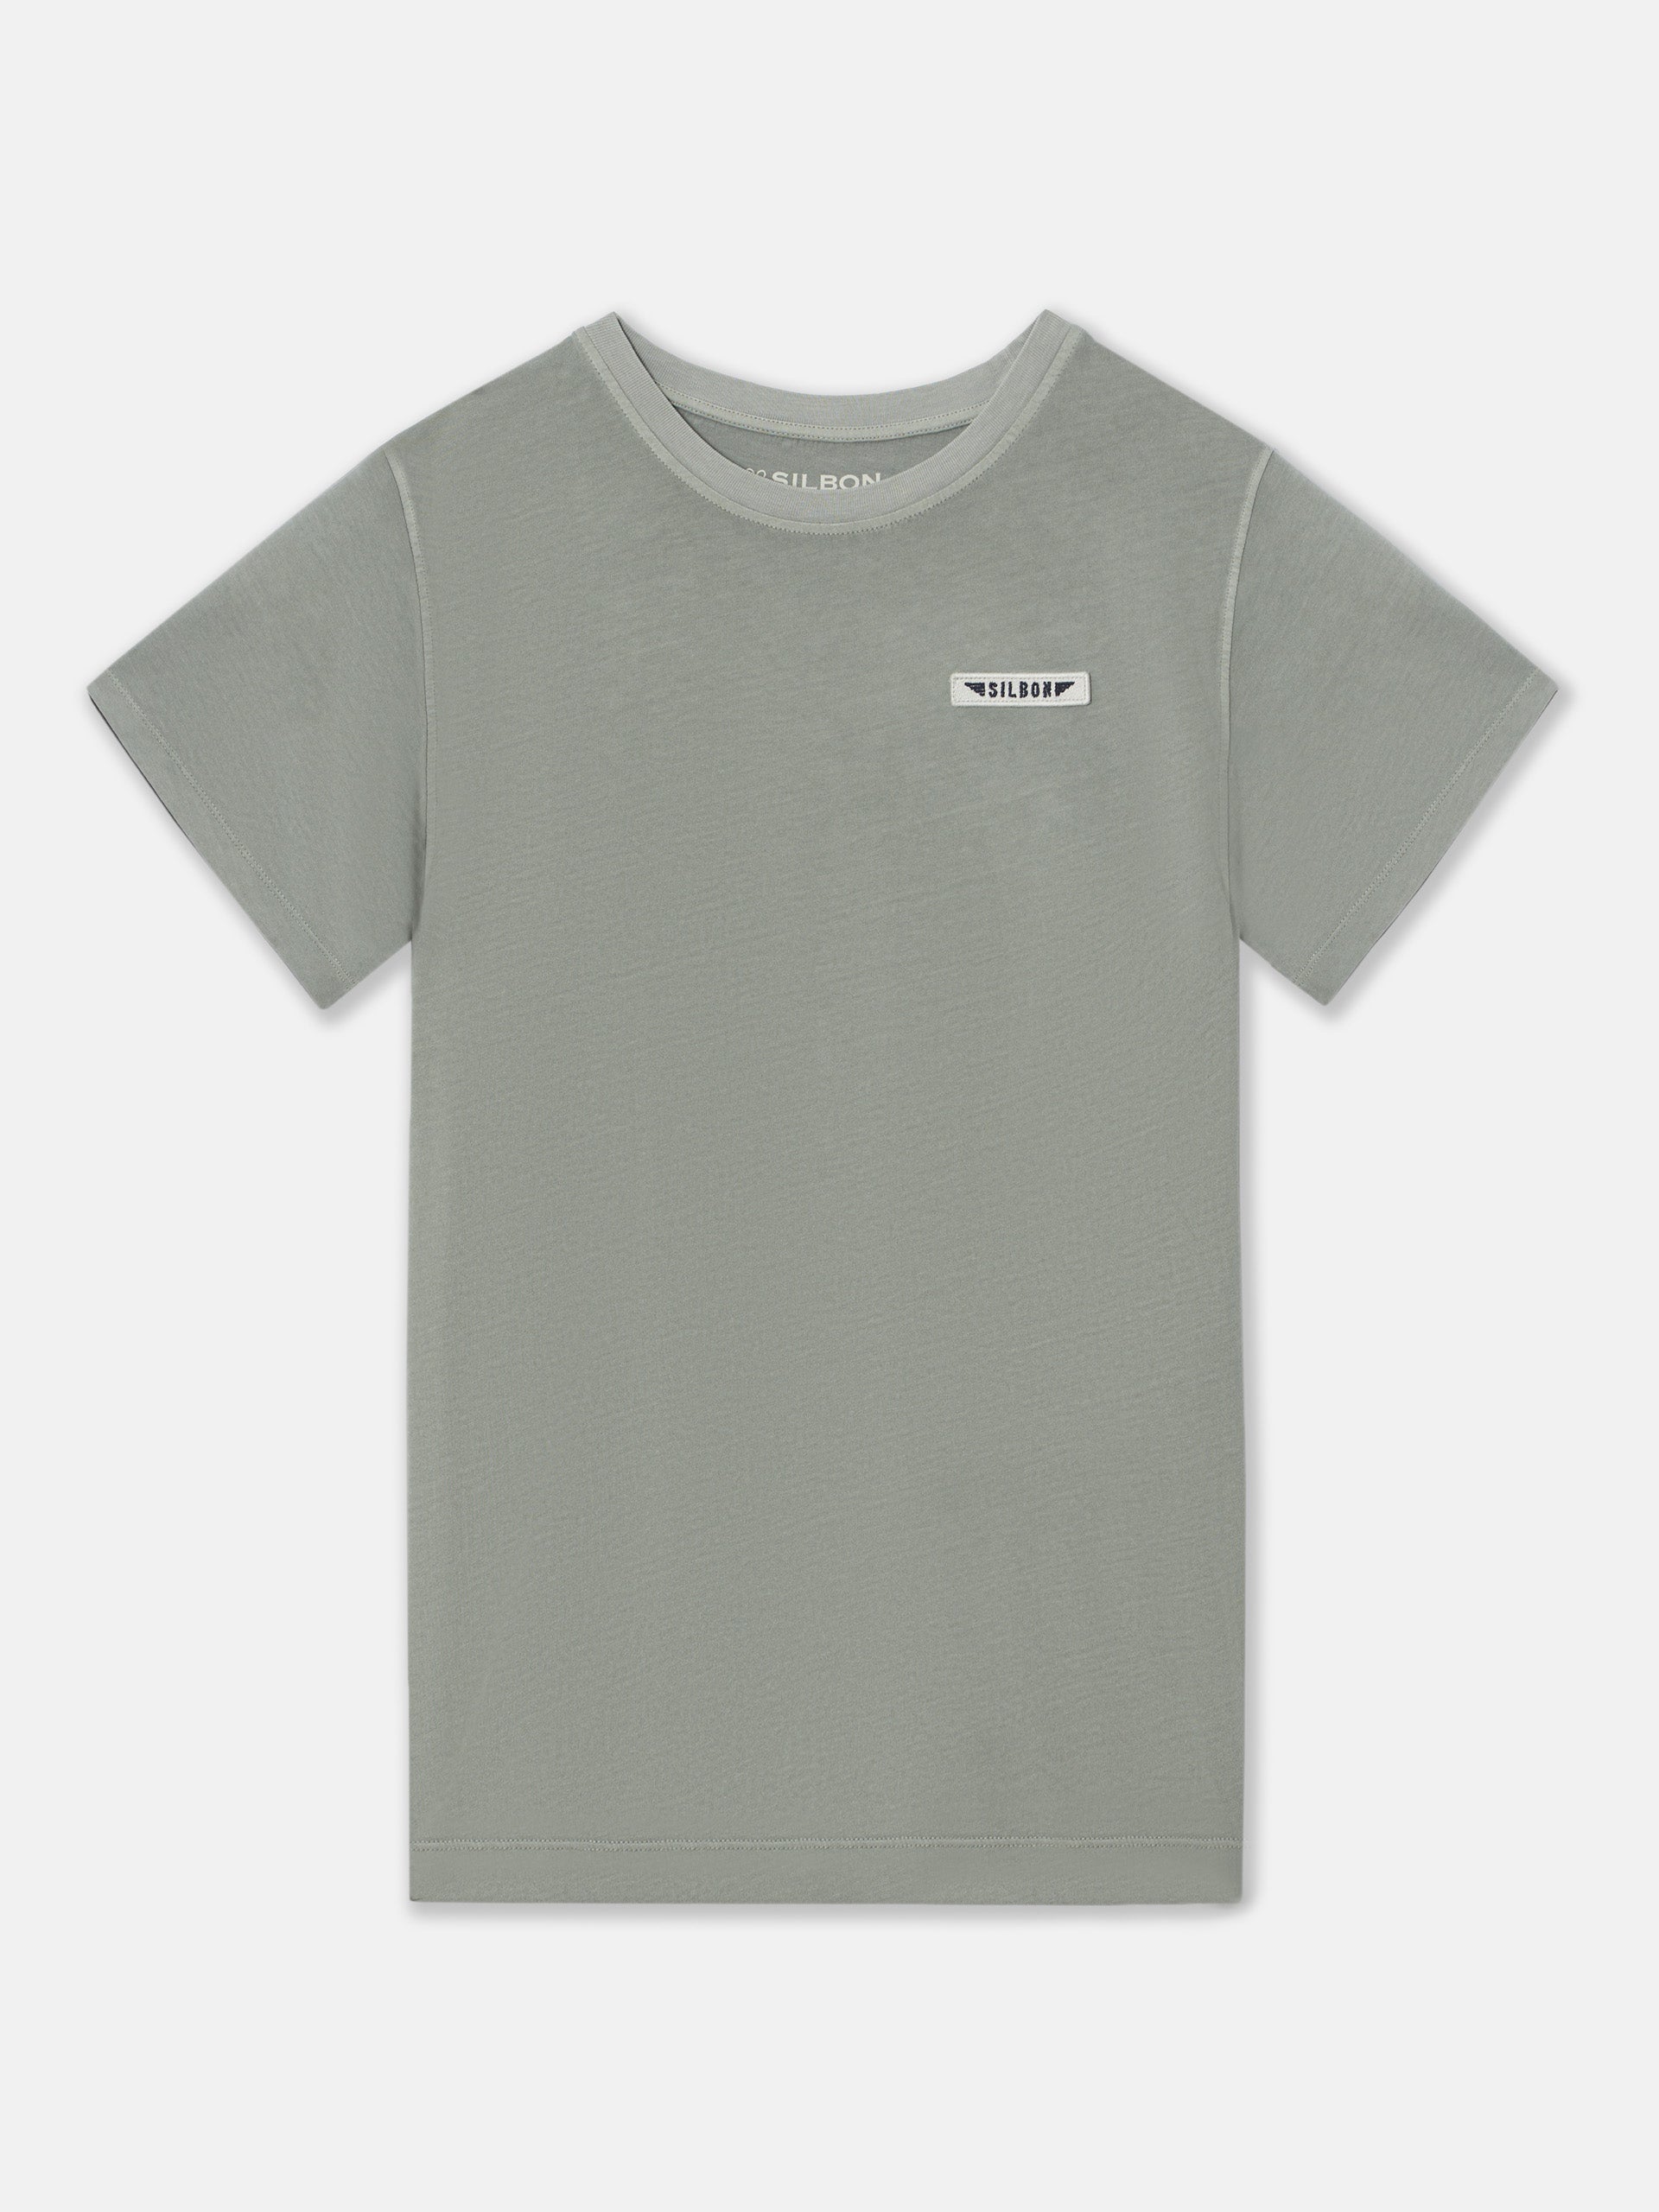 Camiseta logo military verde